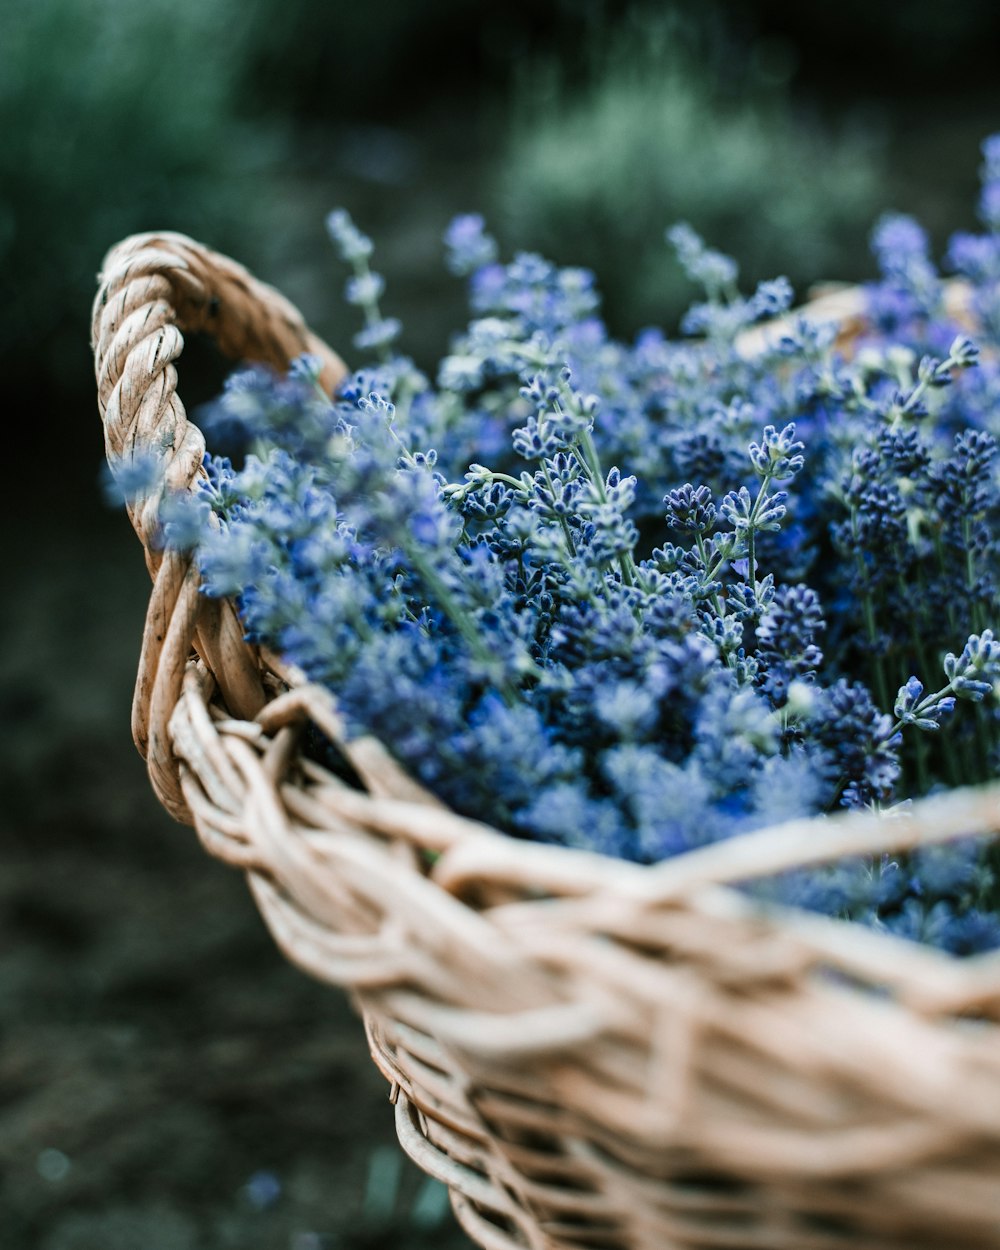 blue flowers in brown woven basket